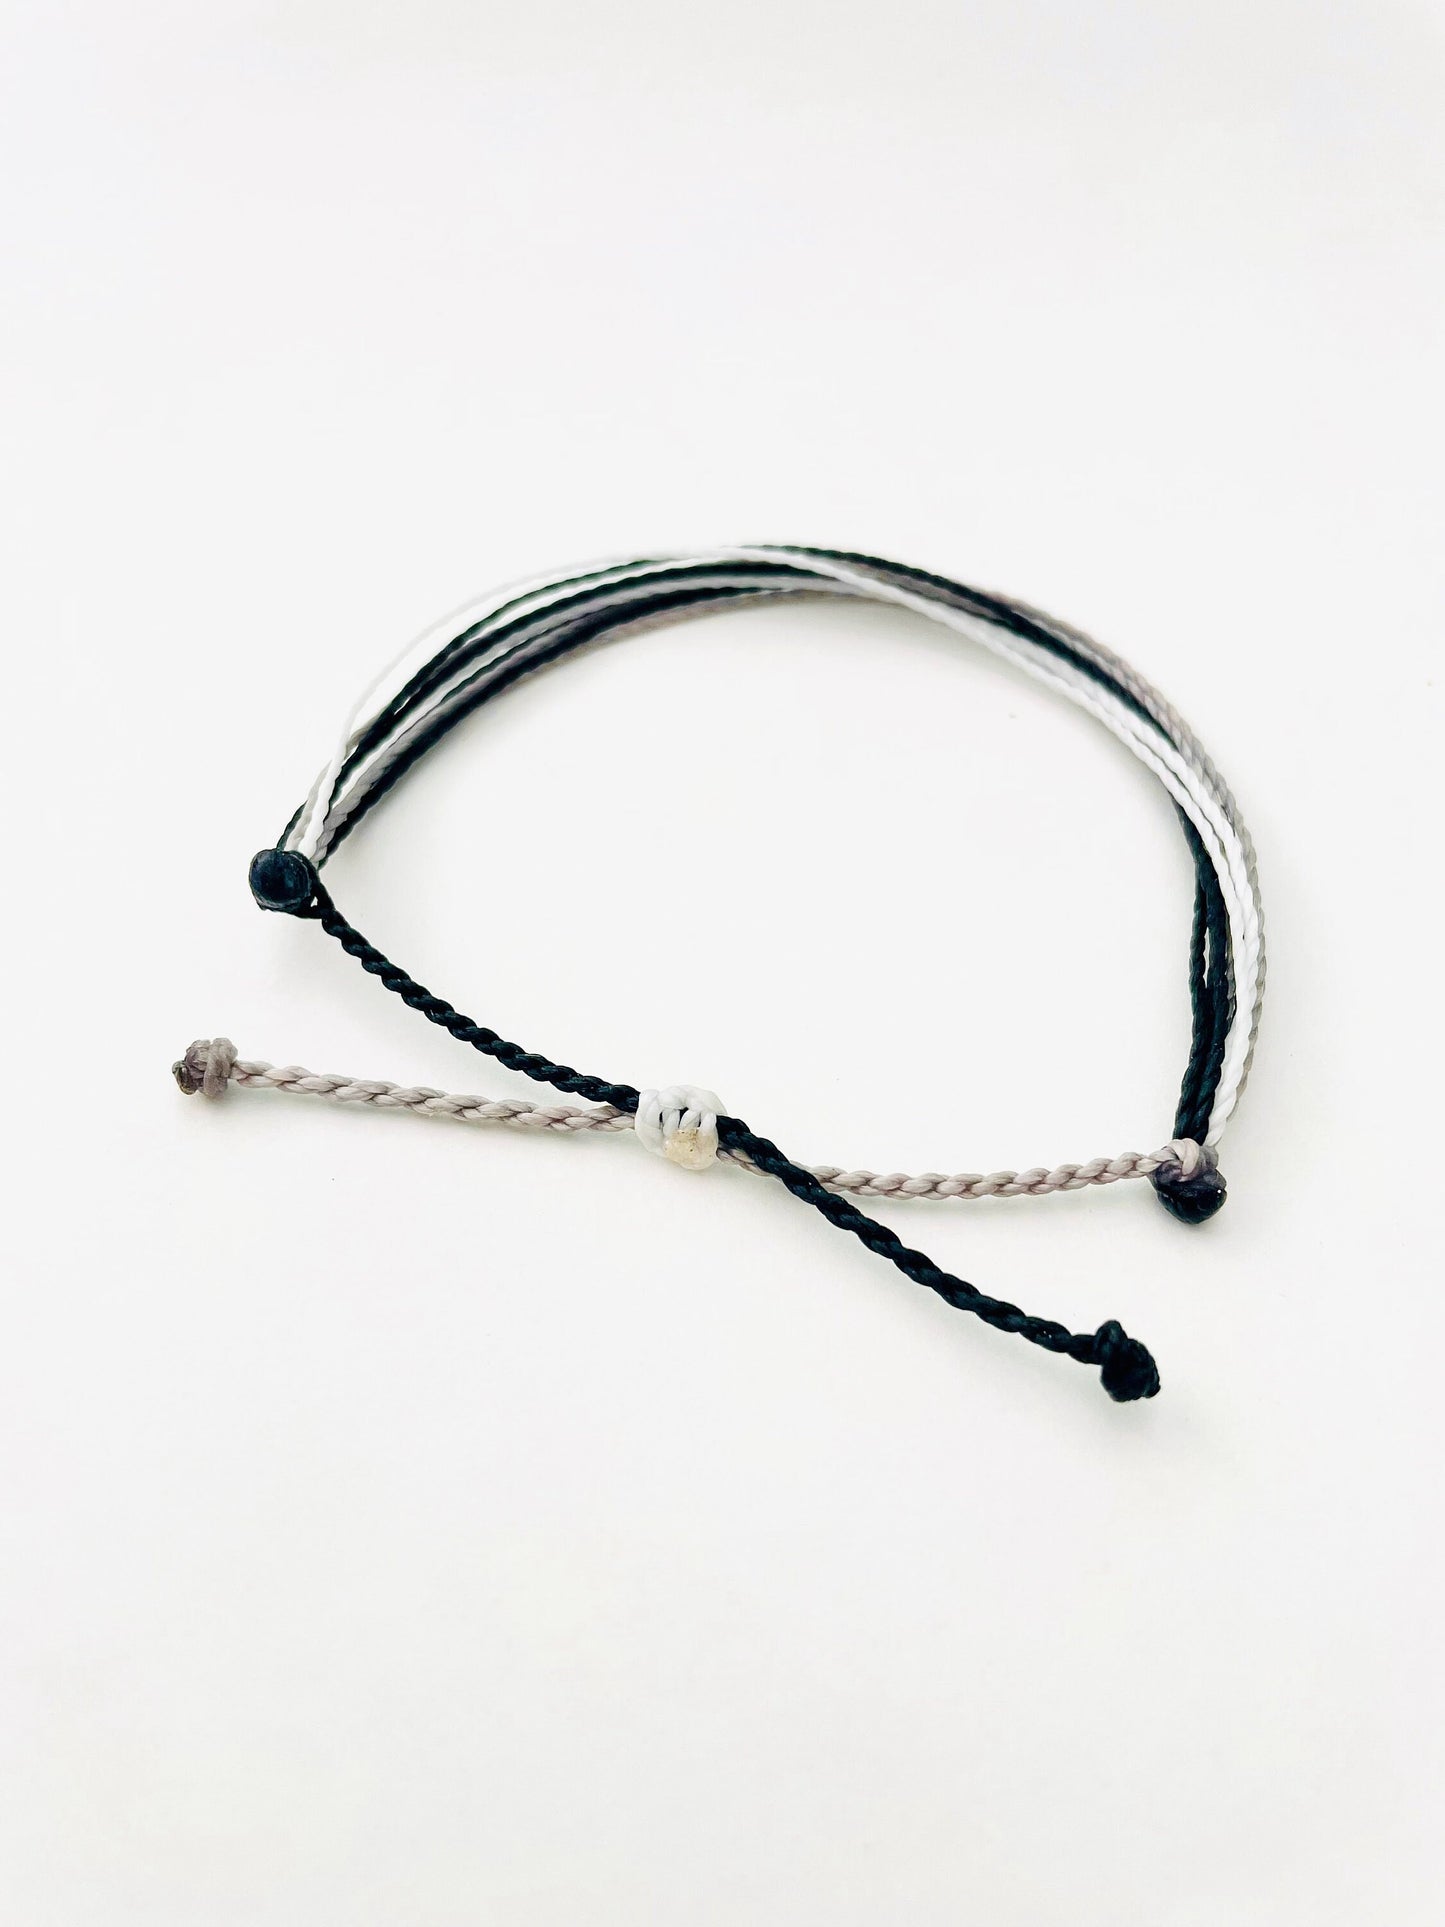 Black String Bracelet, Surfer Bracelet, Bracelet for Men or Women, Thread Bracelet, Waterproof, Adjustable, Handmade Bracelets